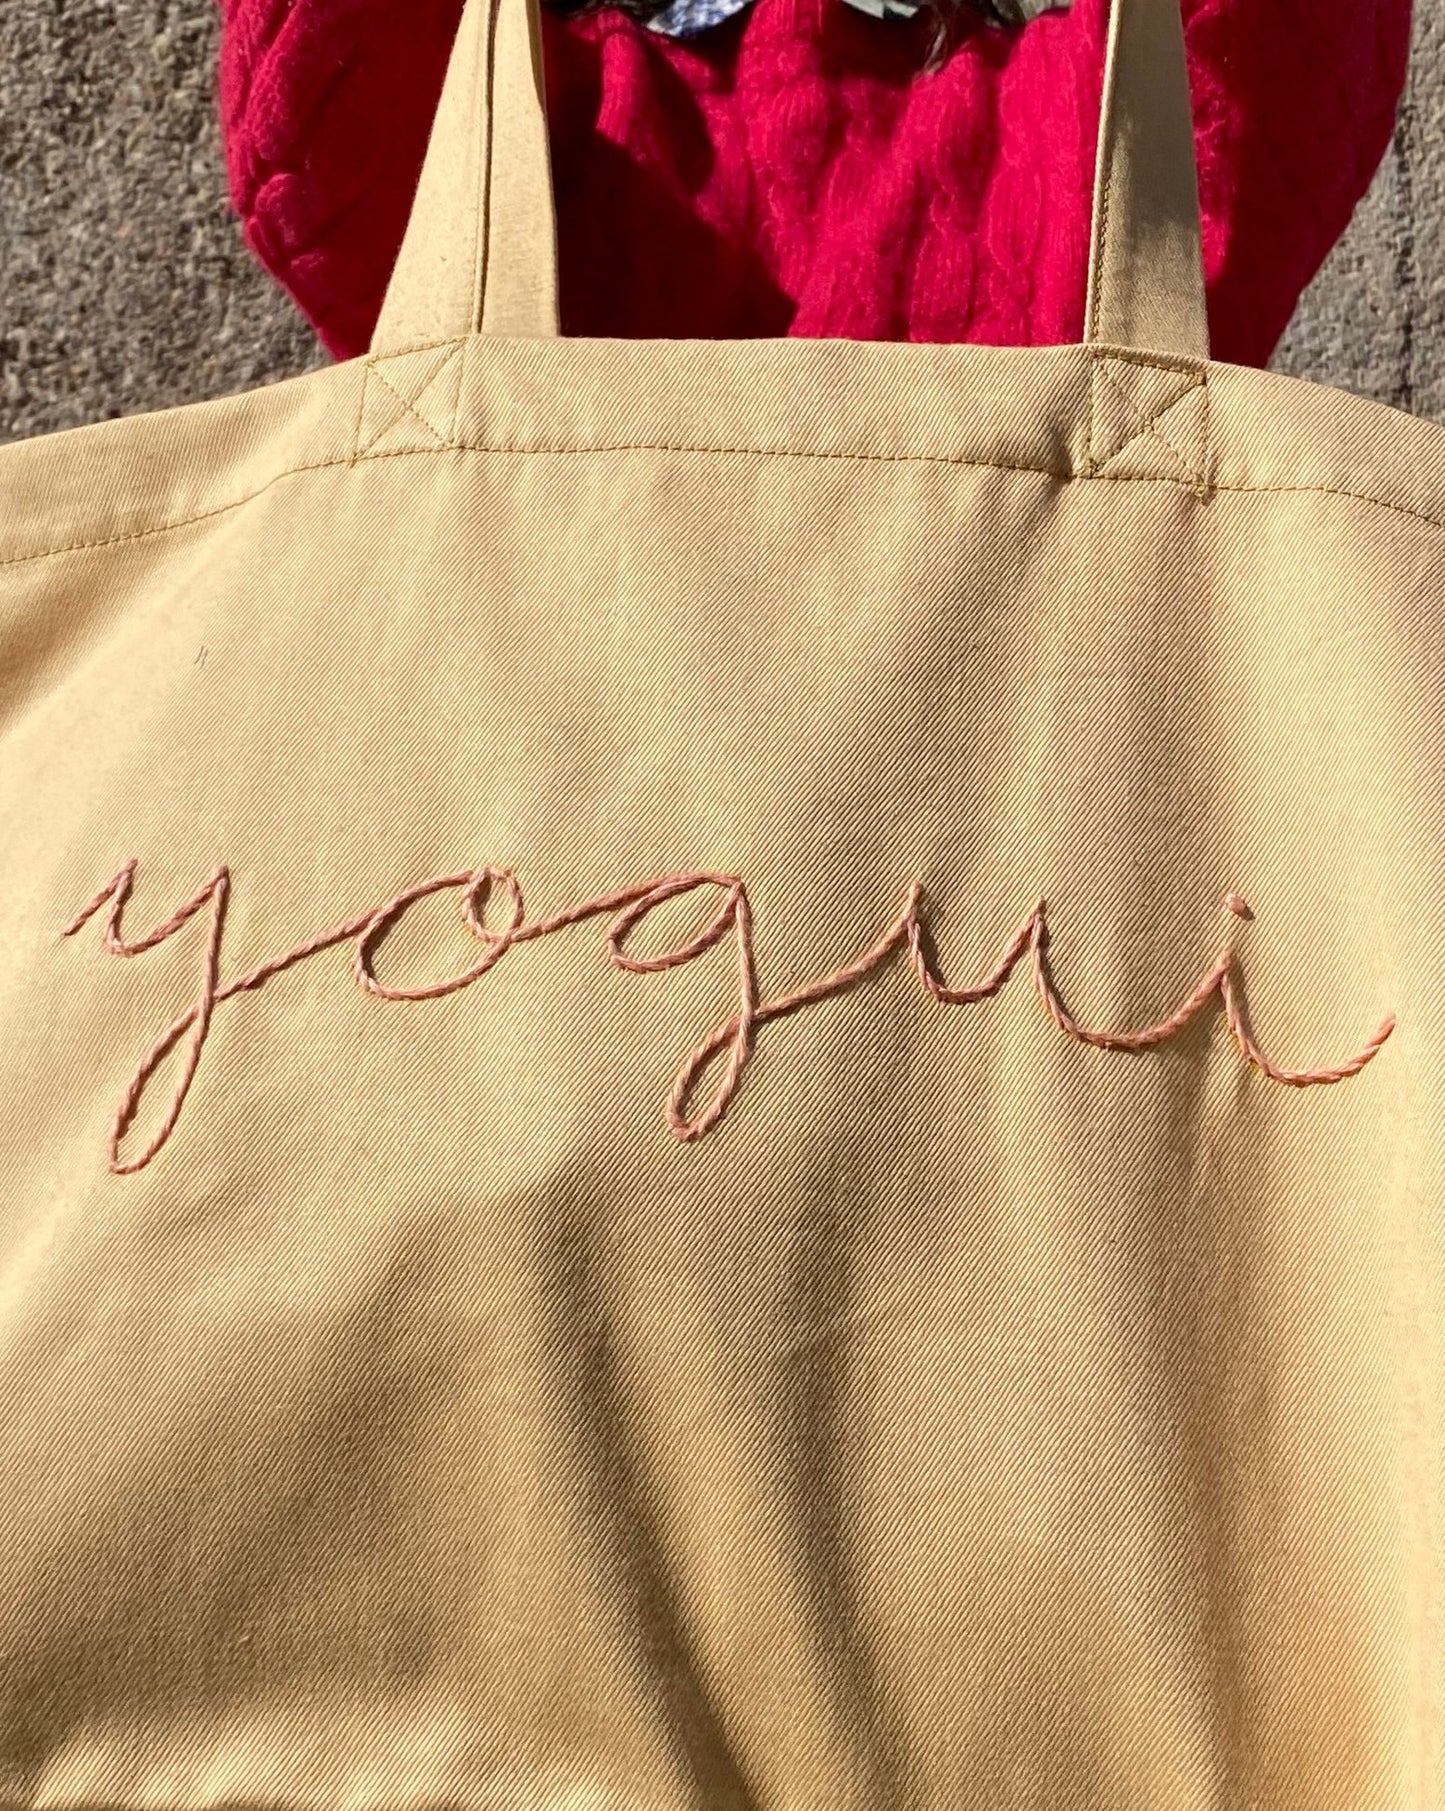 YOGUI Shopper bag